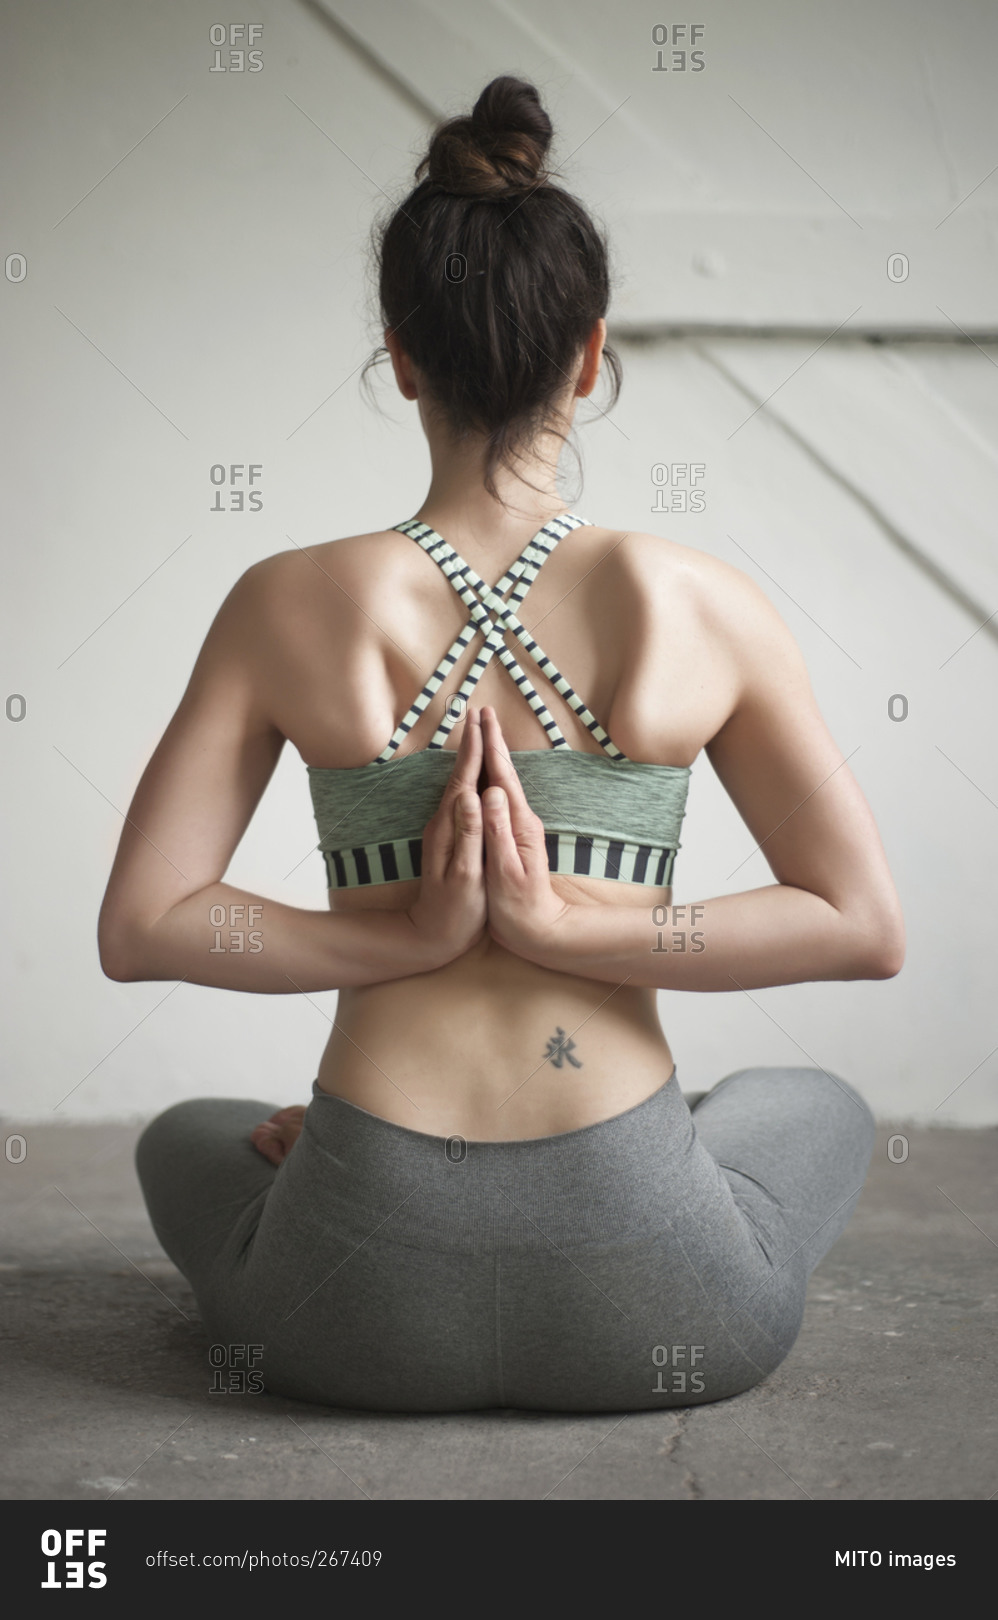 Four Osteoporosis-Safe Yoga Poses | Yoga Anytime